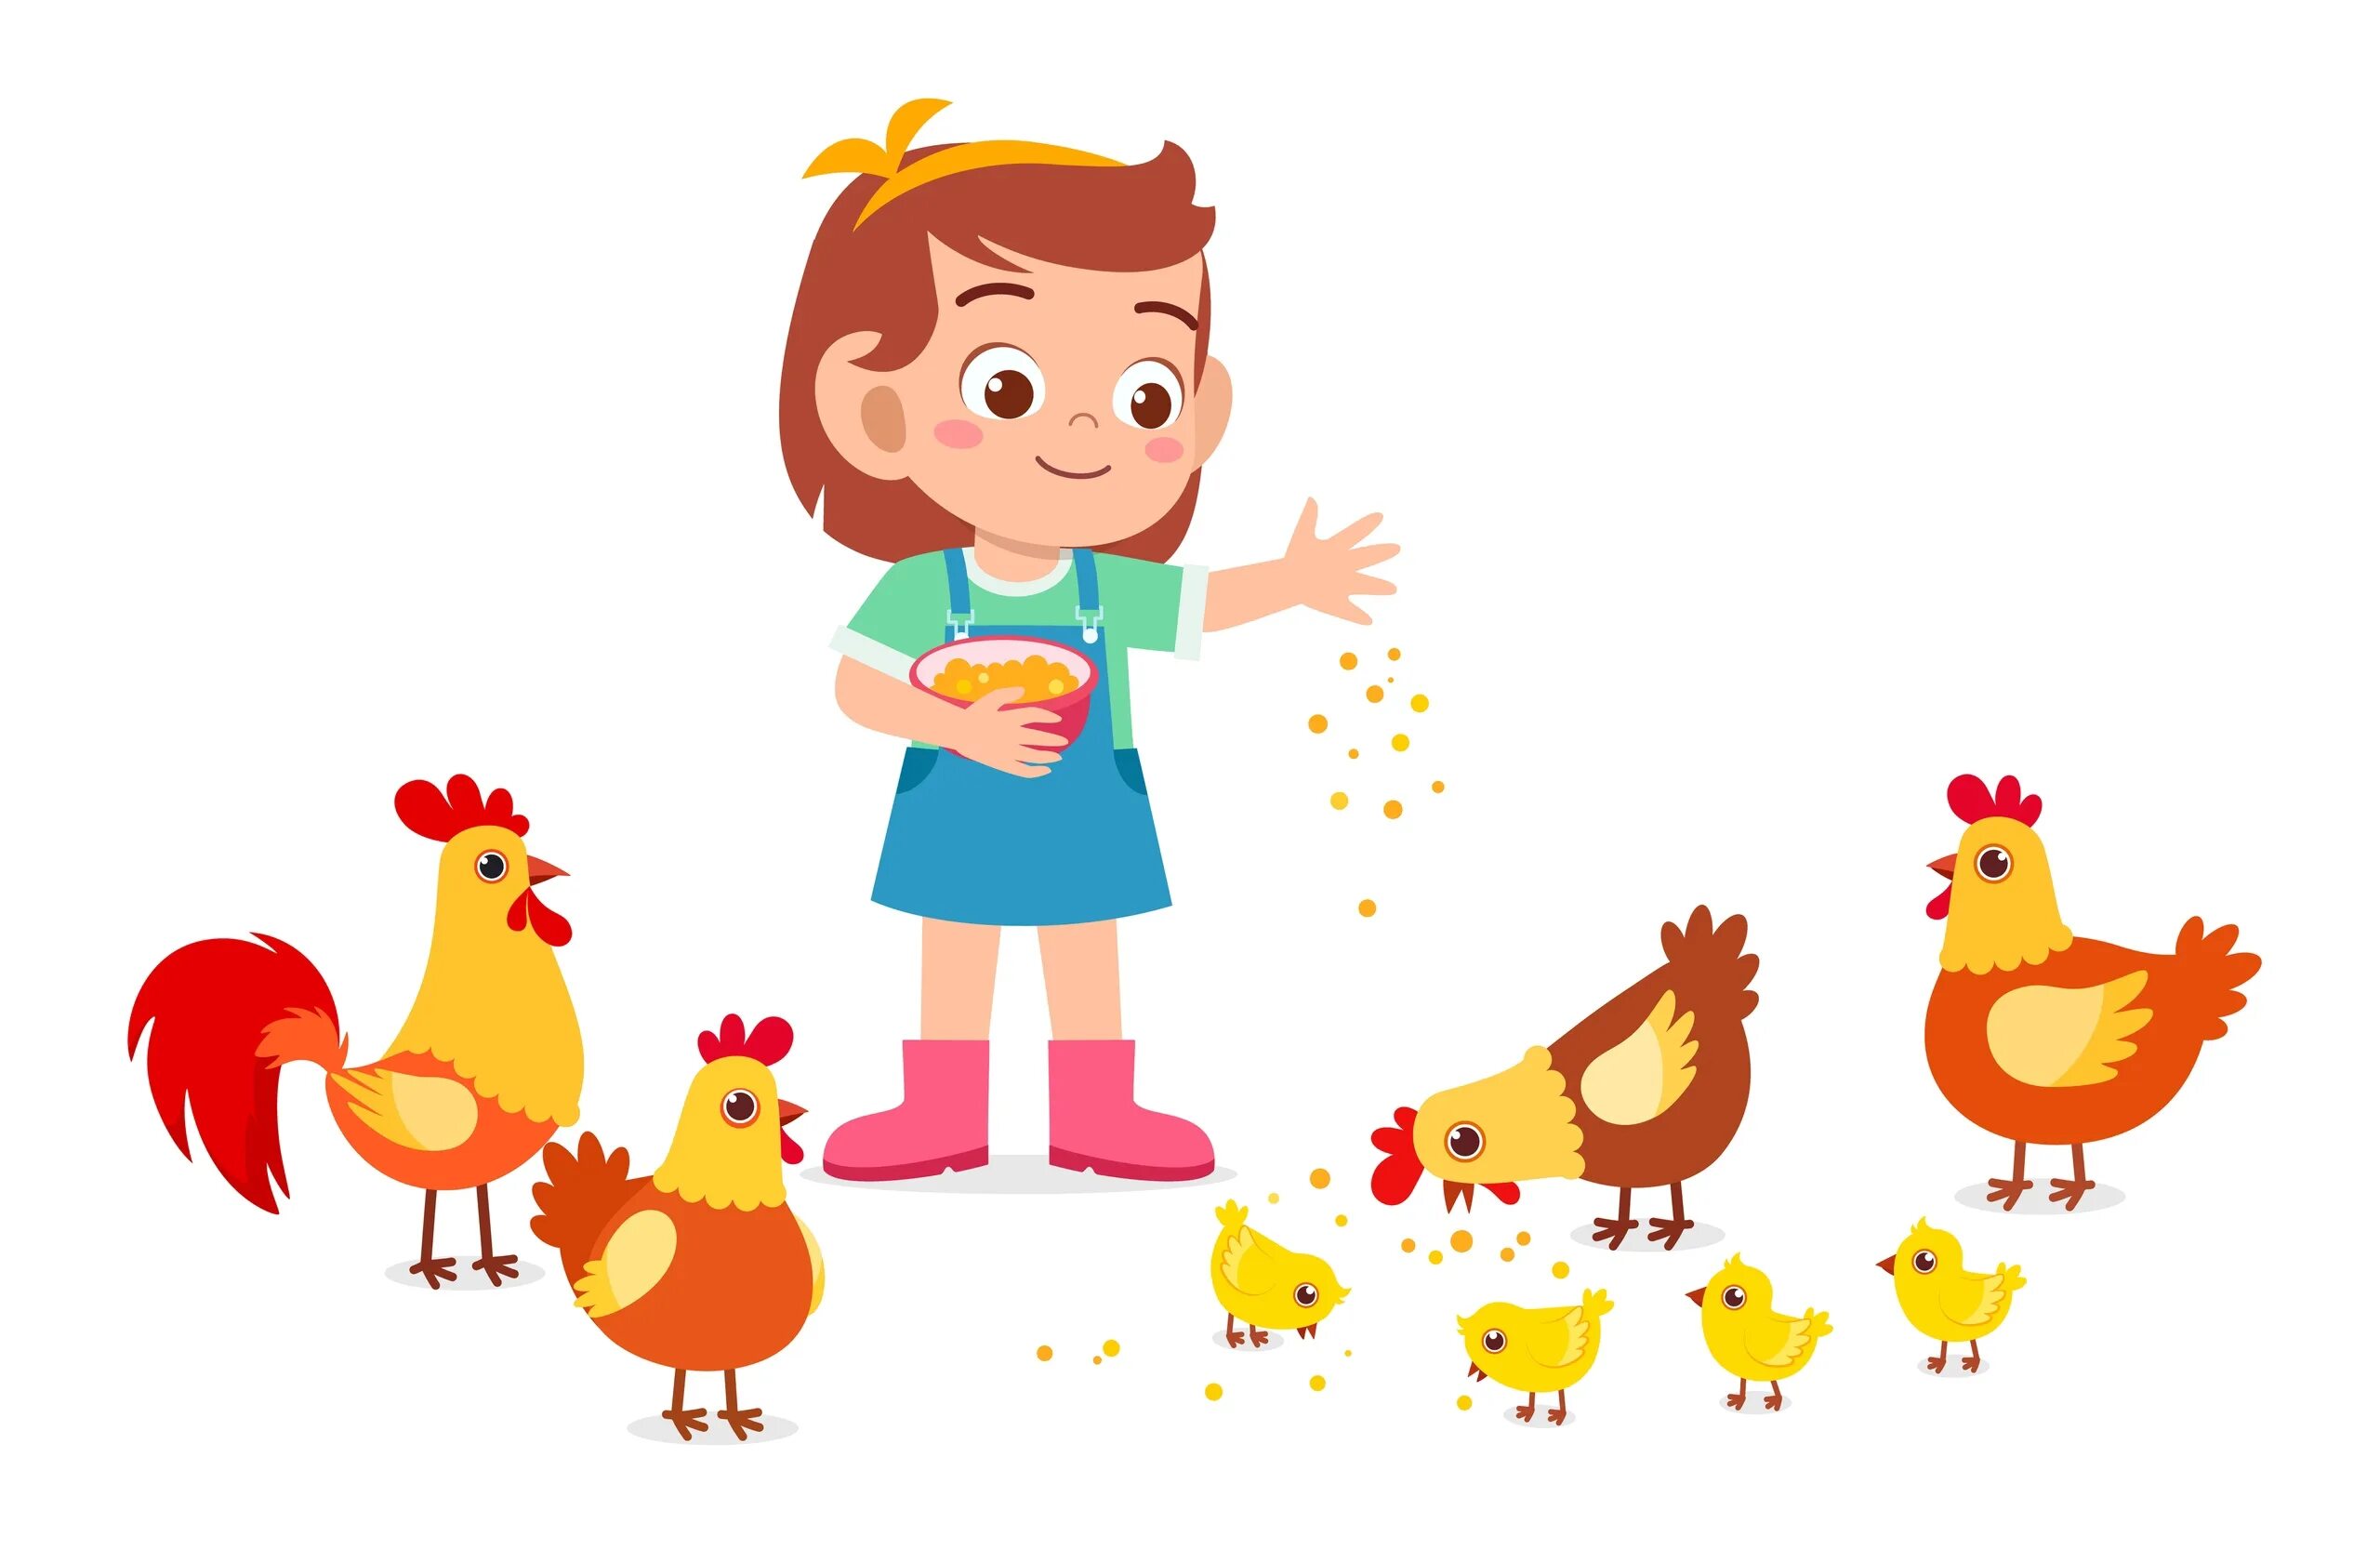 Картина дети кормят цыплят. Девочка кормит цыплят. Дети кормят цыплят. Картина дети кормят курицу и цыплят. Дети кормят курицу и цыплят картинка.